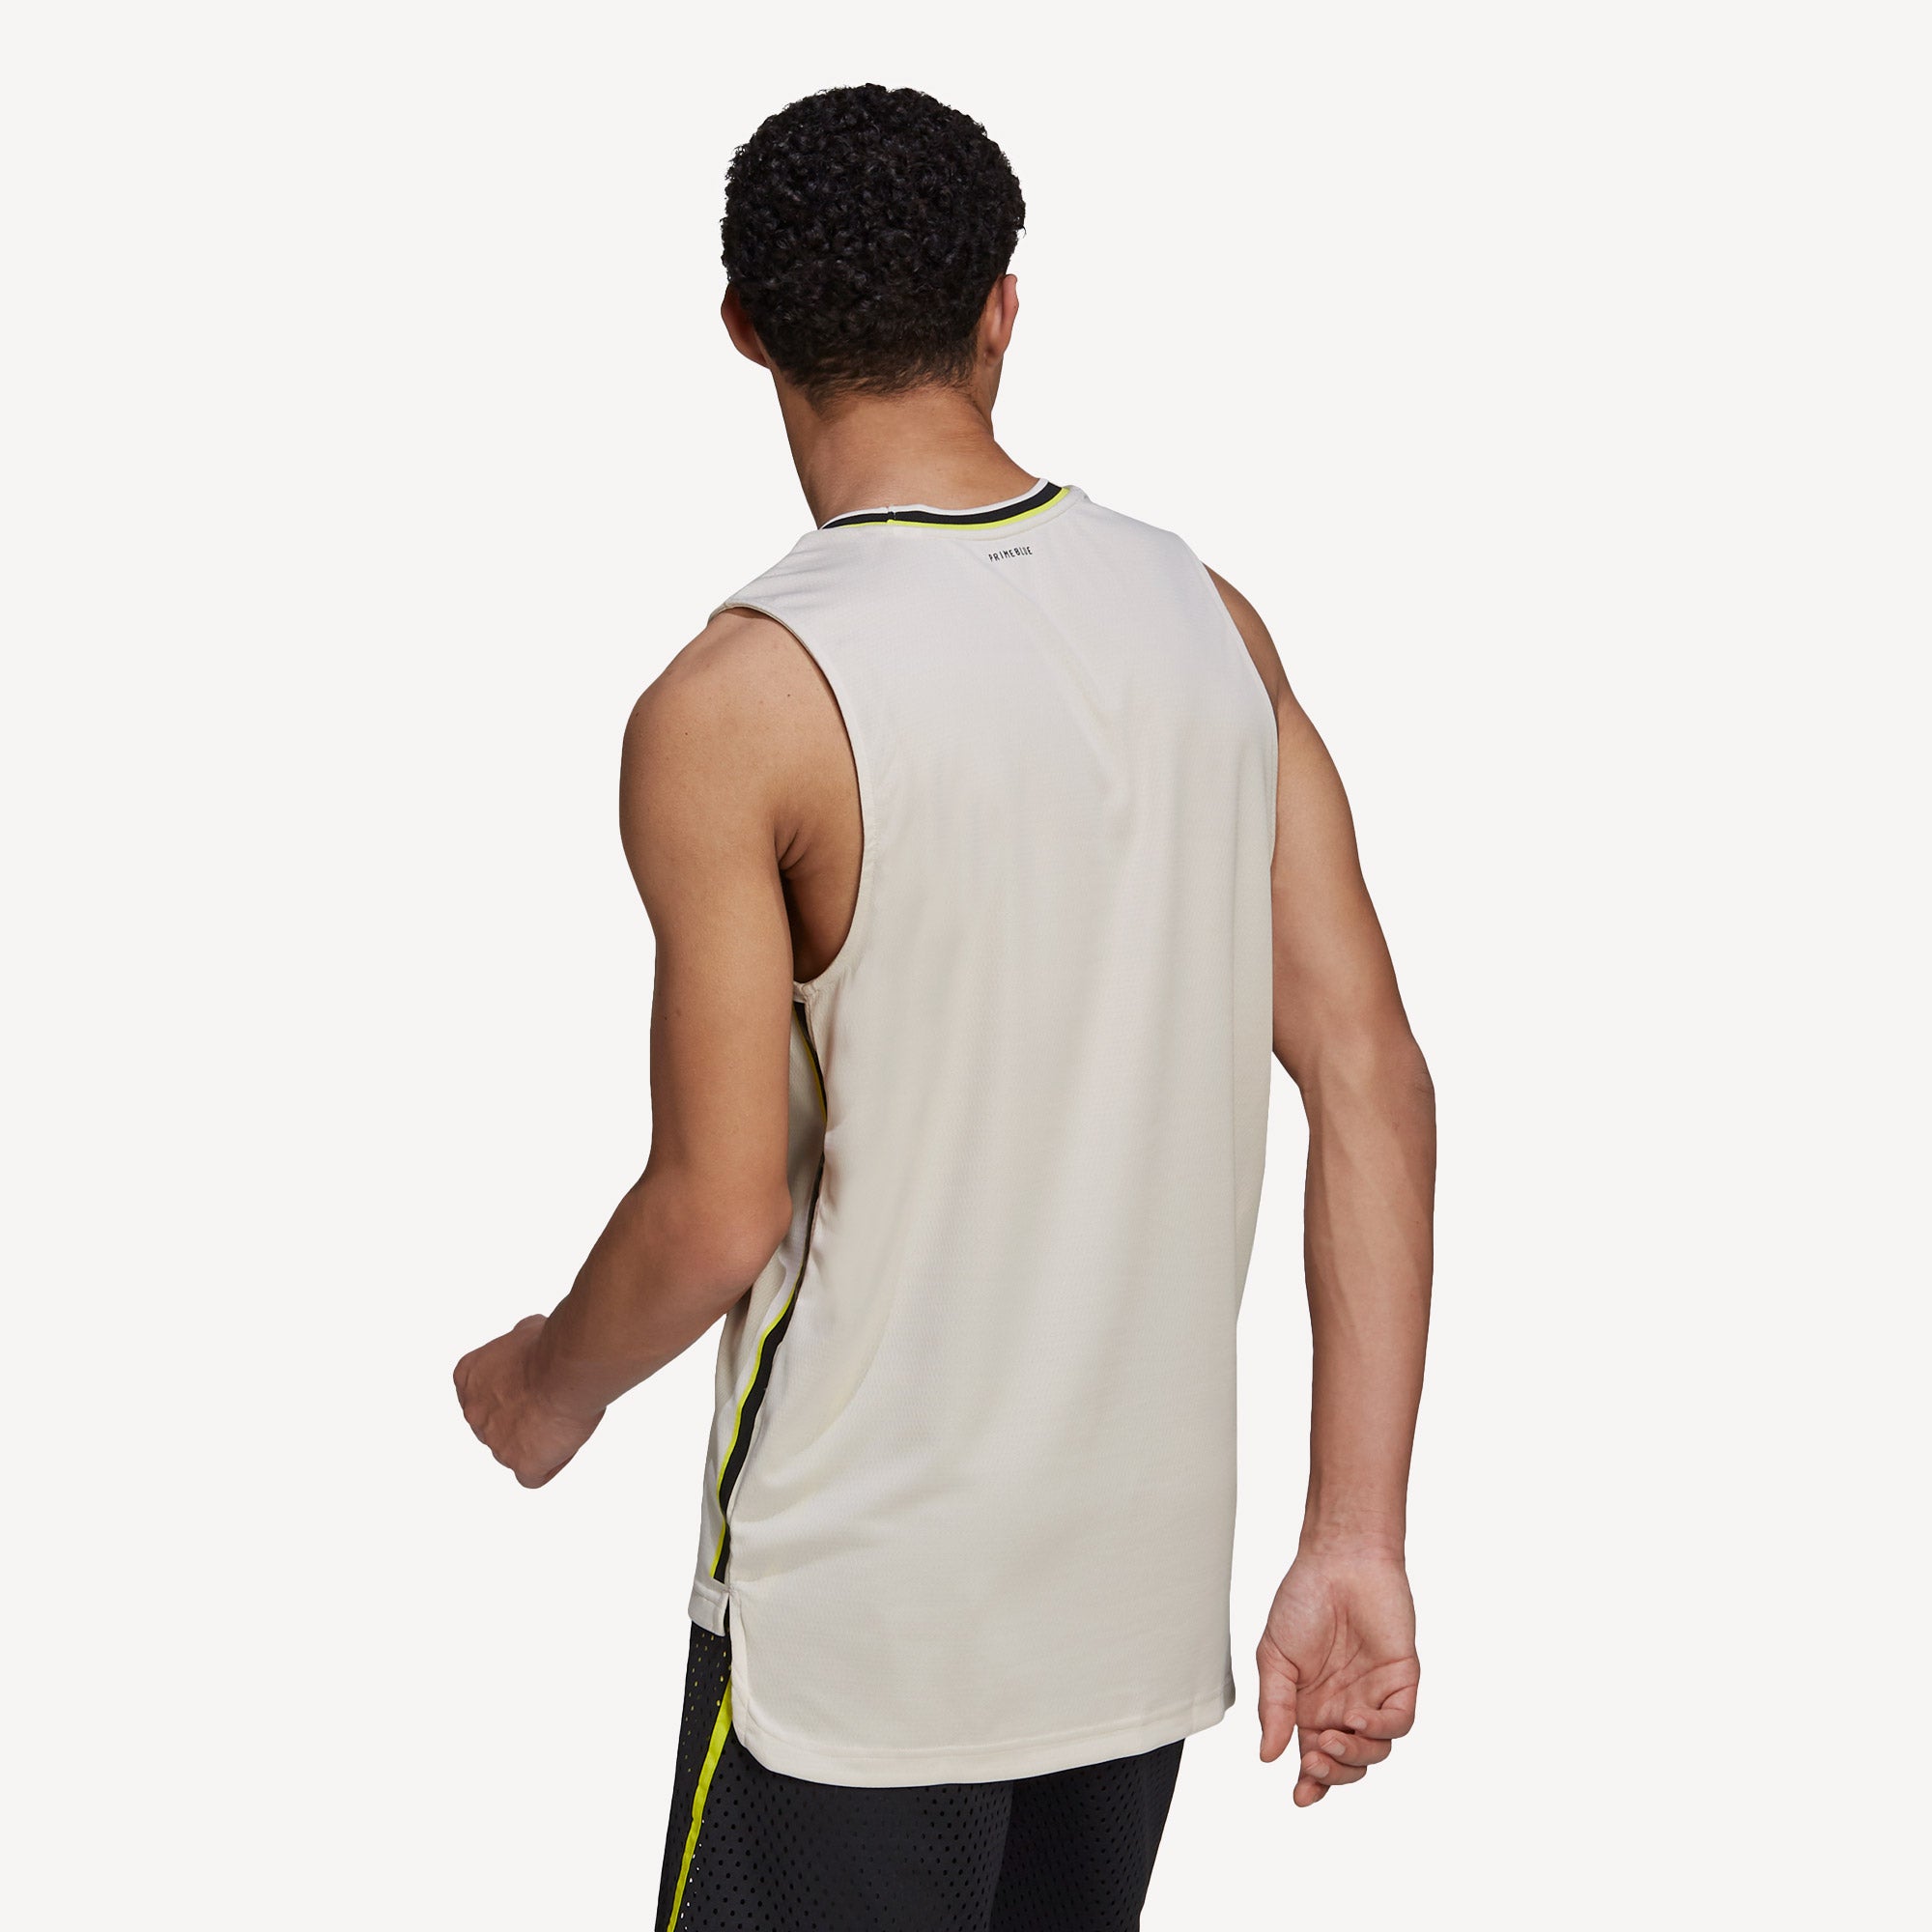 adidas Primeblue Heat Ready Men's Sleeveless Tennis Shirt Grey (2)